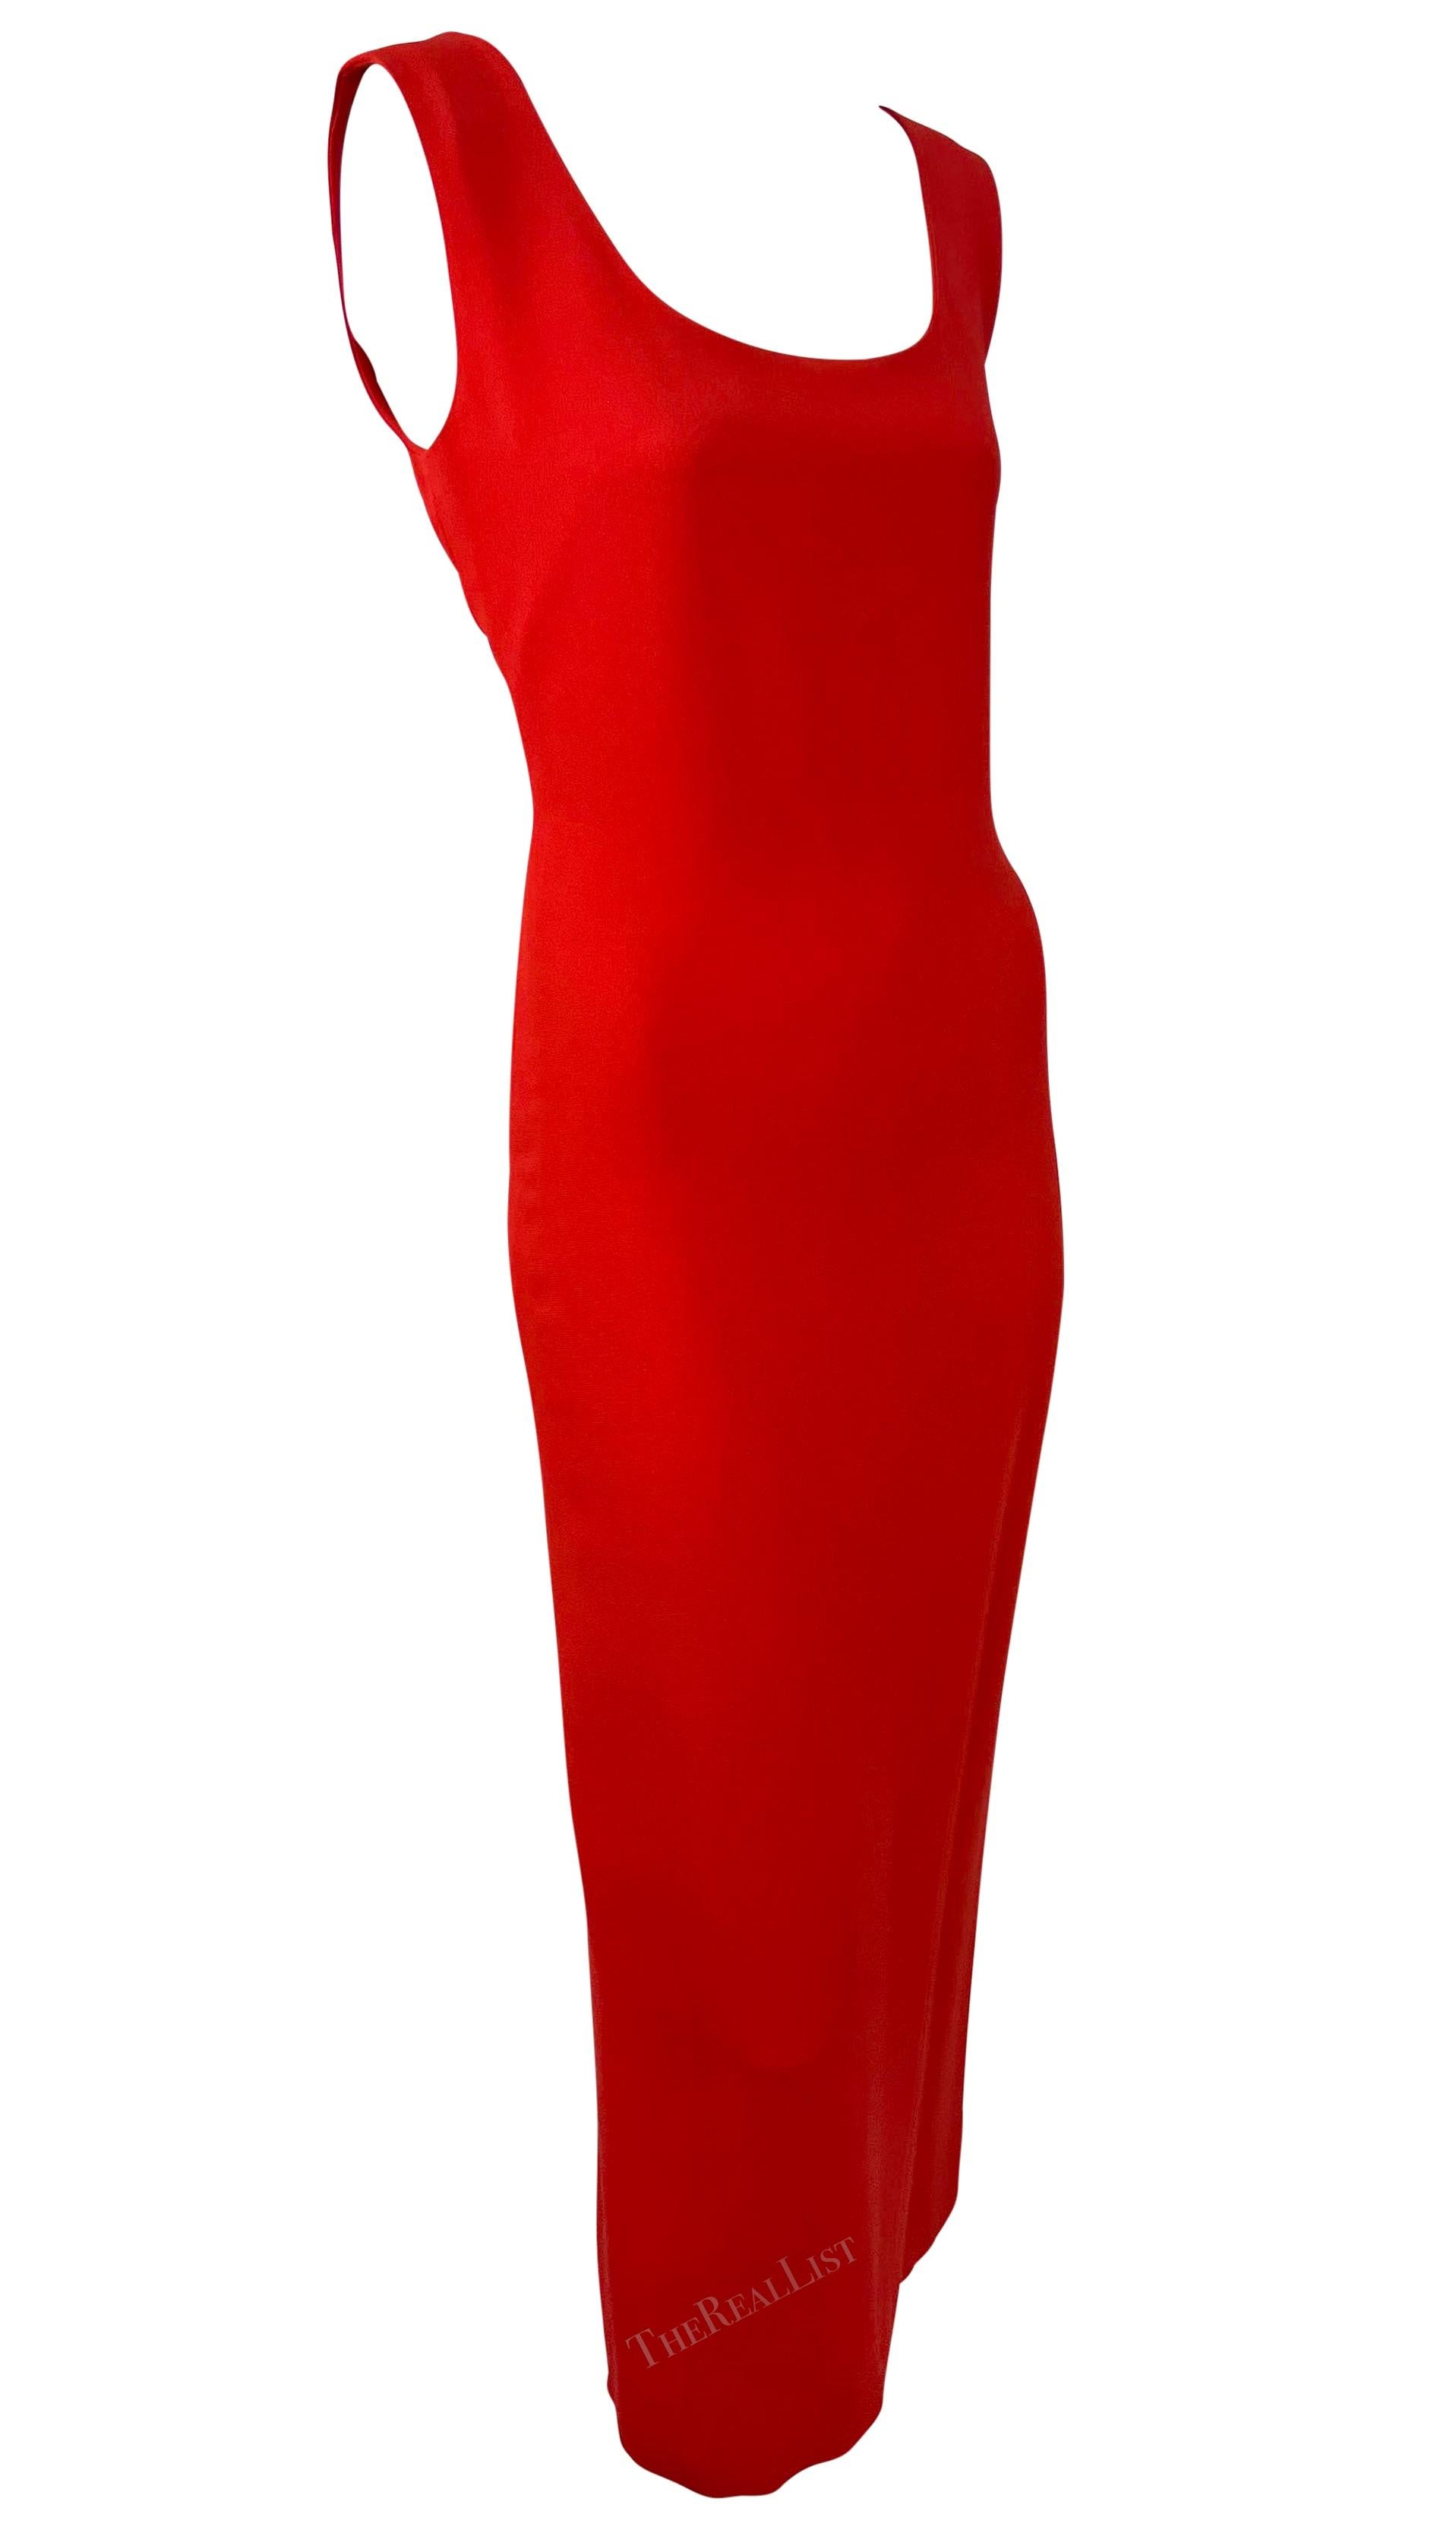 S/S 1993 - Gianni Versace Runway Ad Red - Robe sans manches à dos plongeant en vente 7